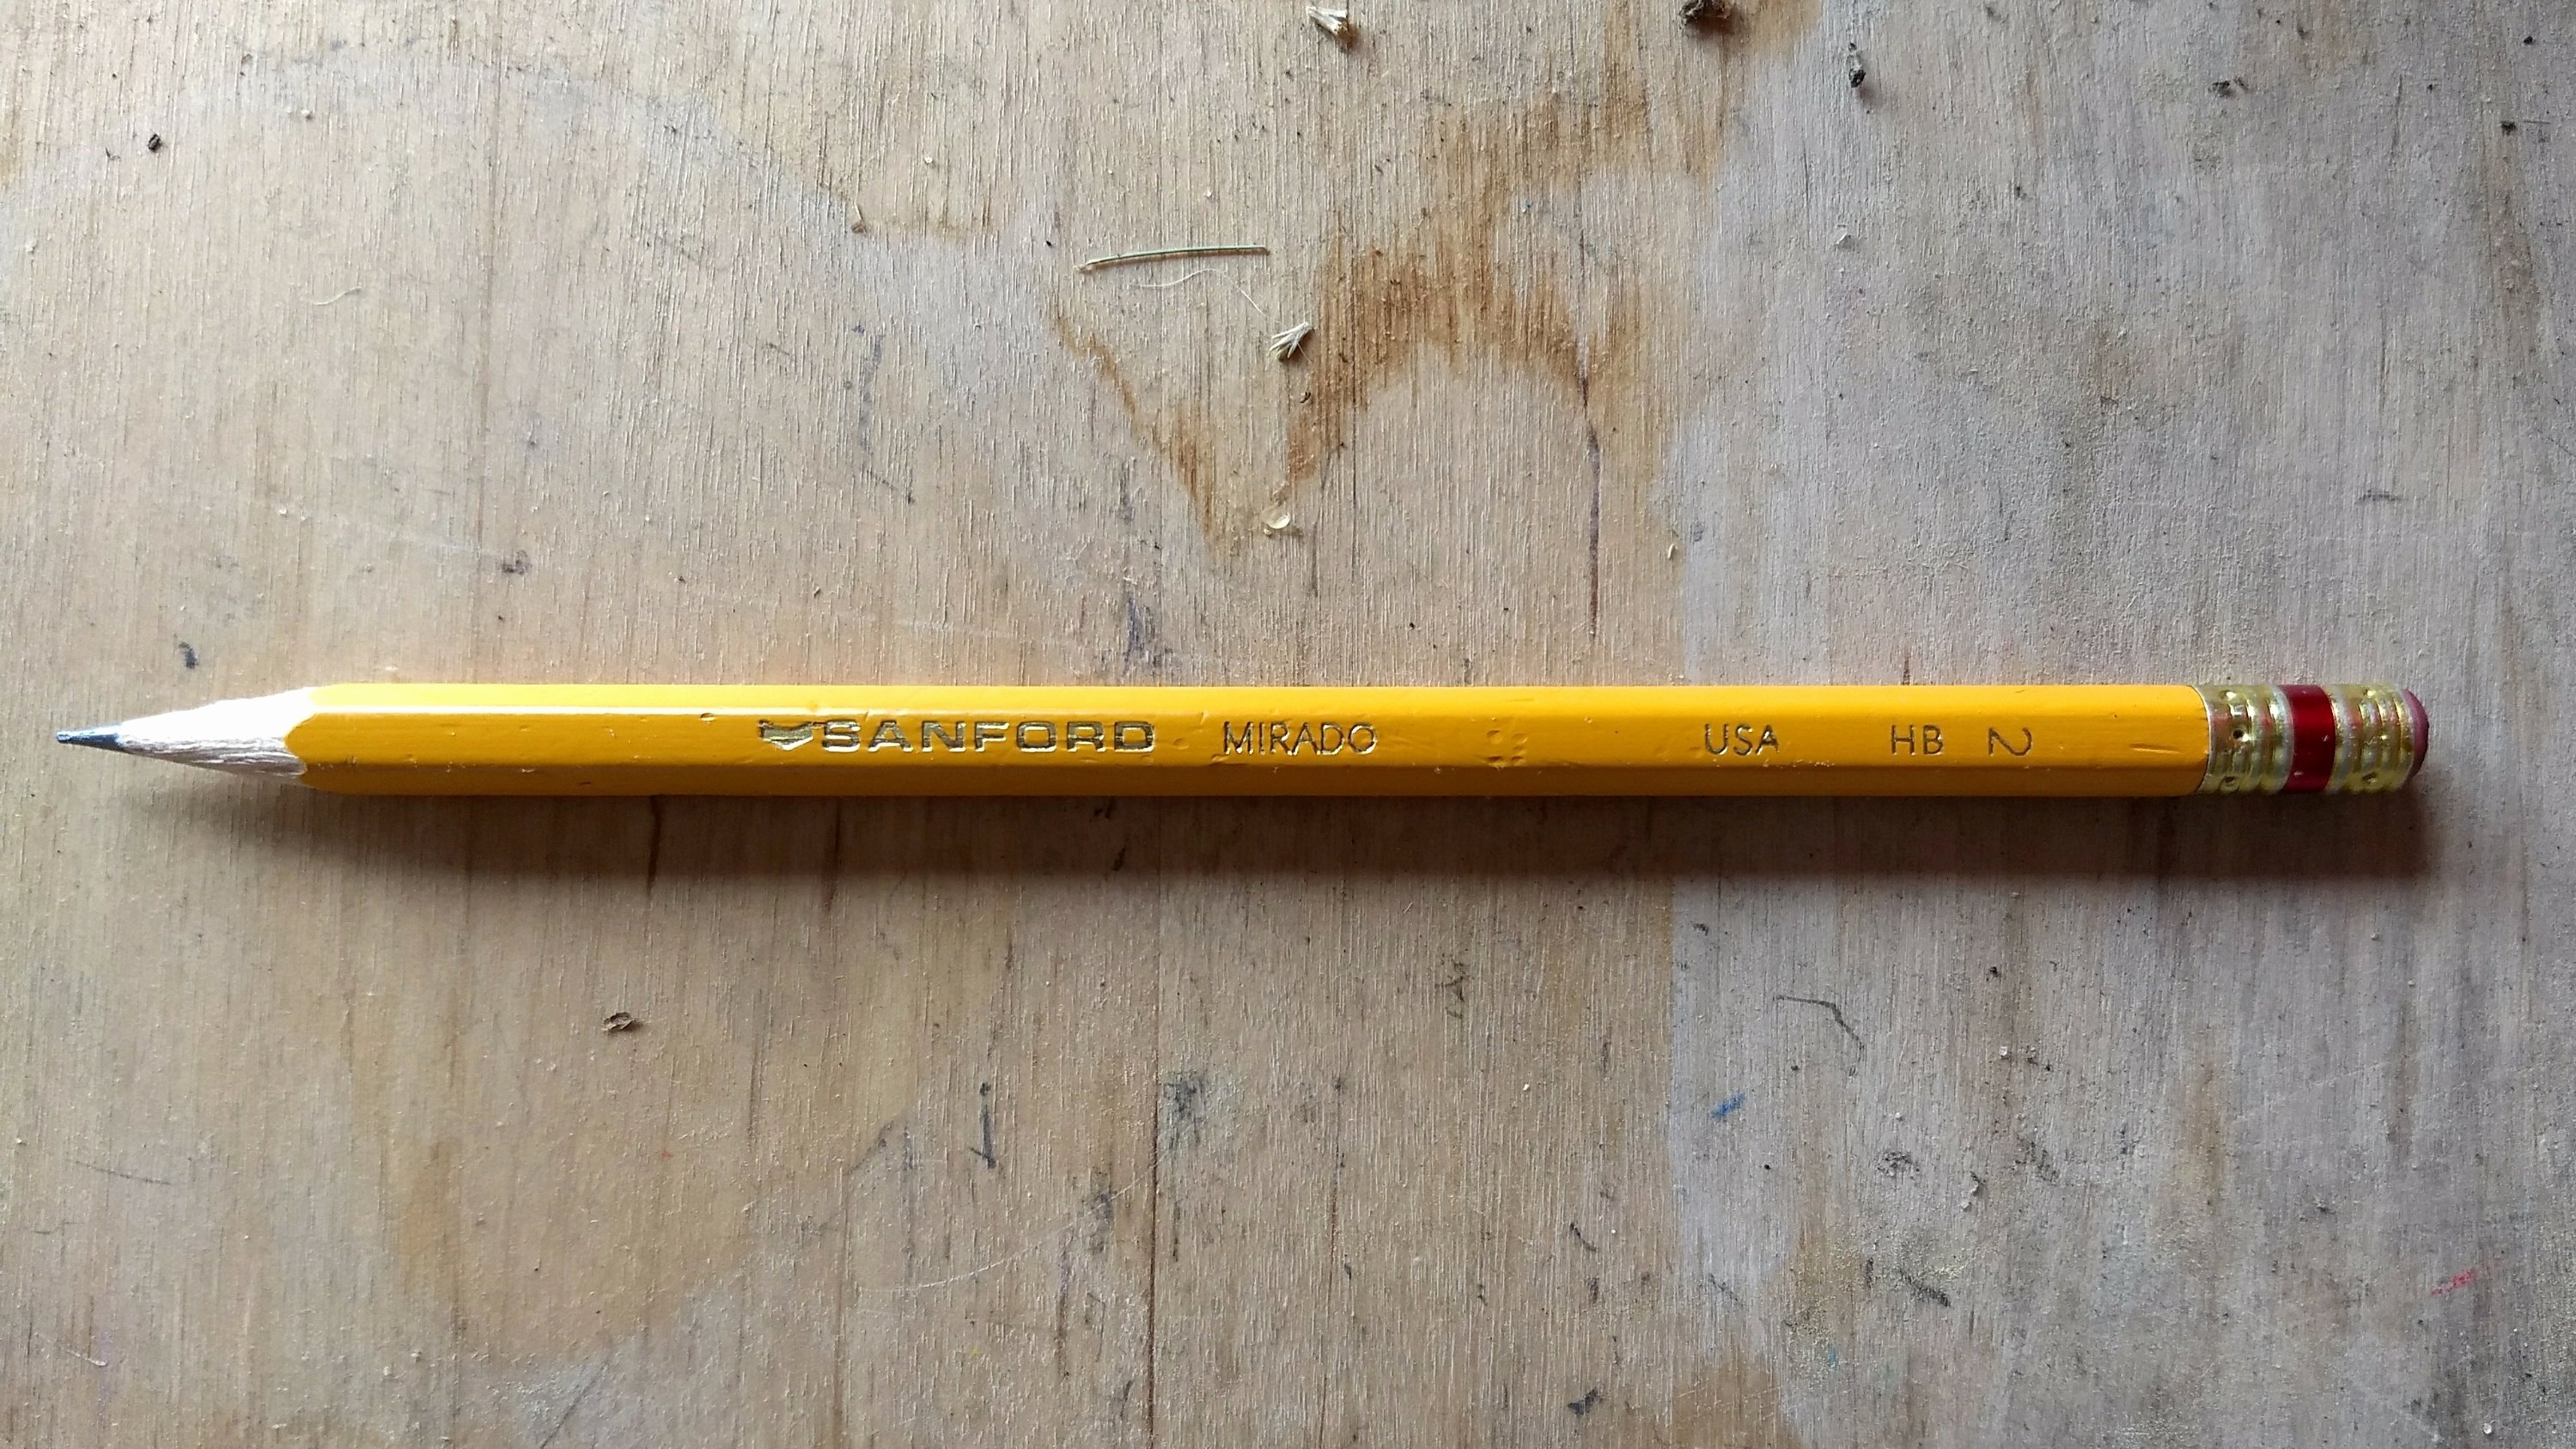 A Picture Of A Pencil Luxury Pencil Revolution – Pencil Philosophy Wooden Wisdom